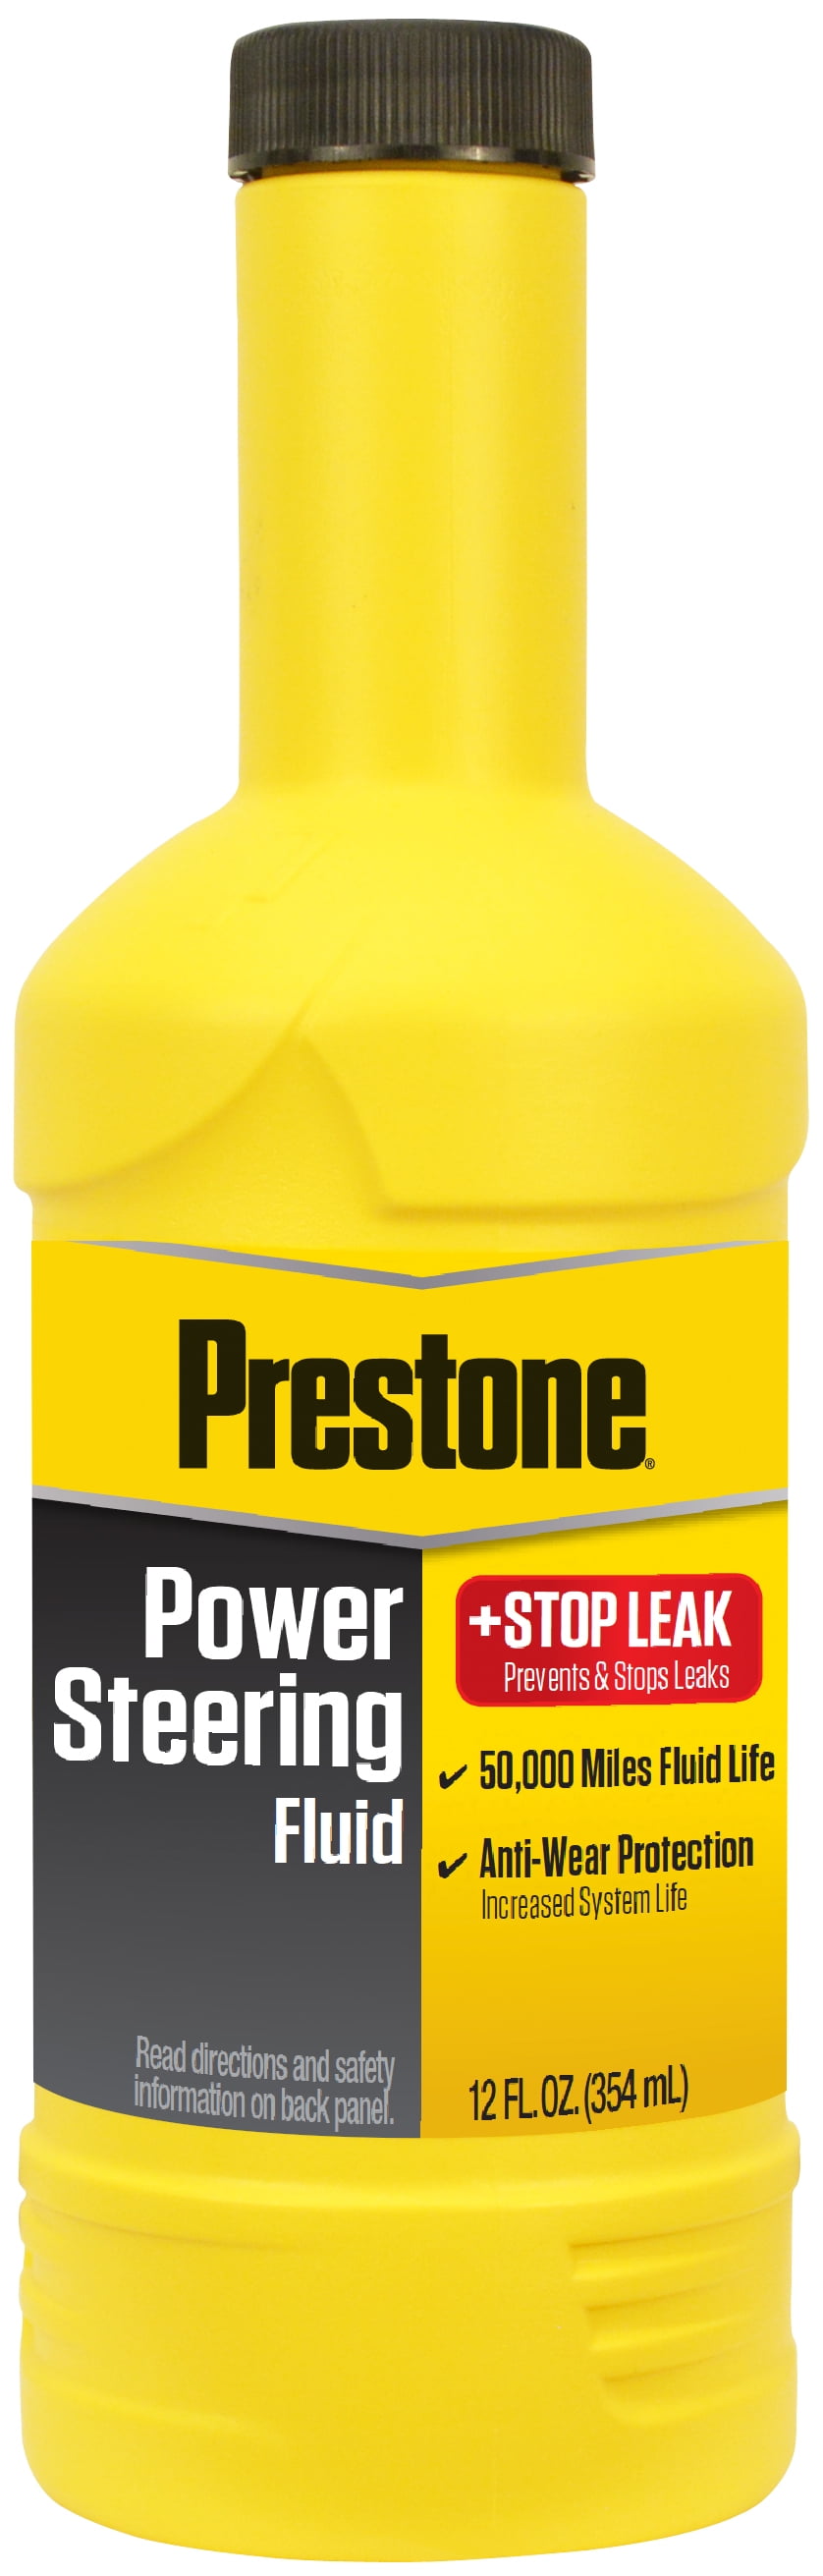 Prestone Power Steering Fluid Plus Stop Leak, 12 oz